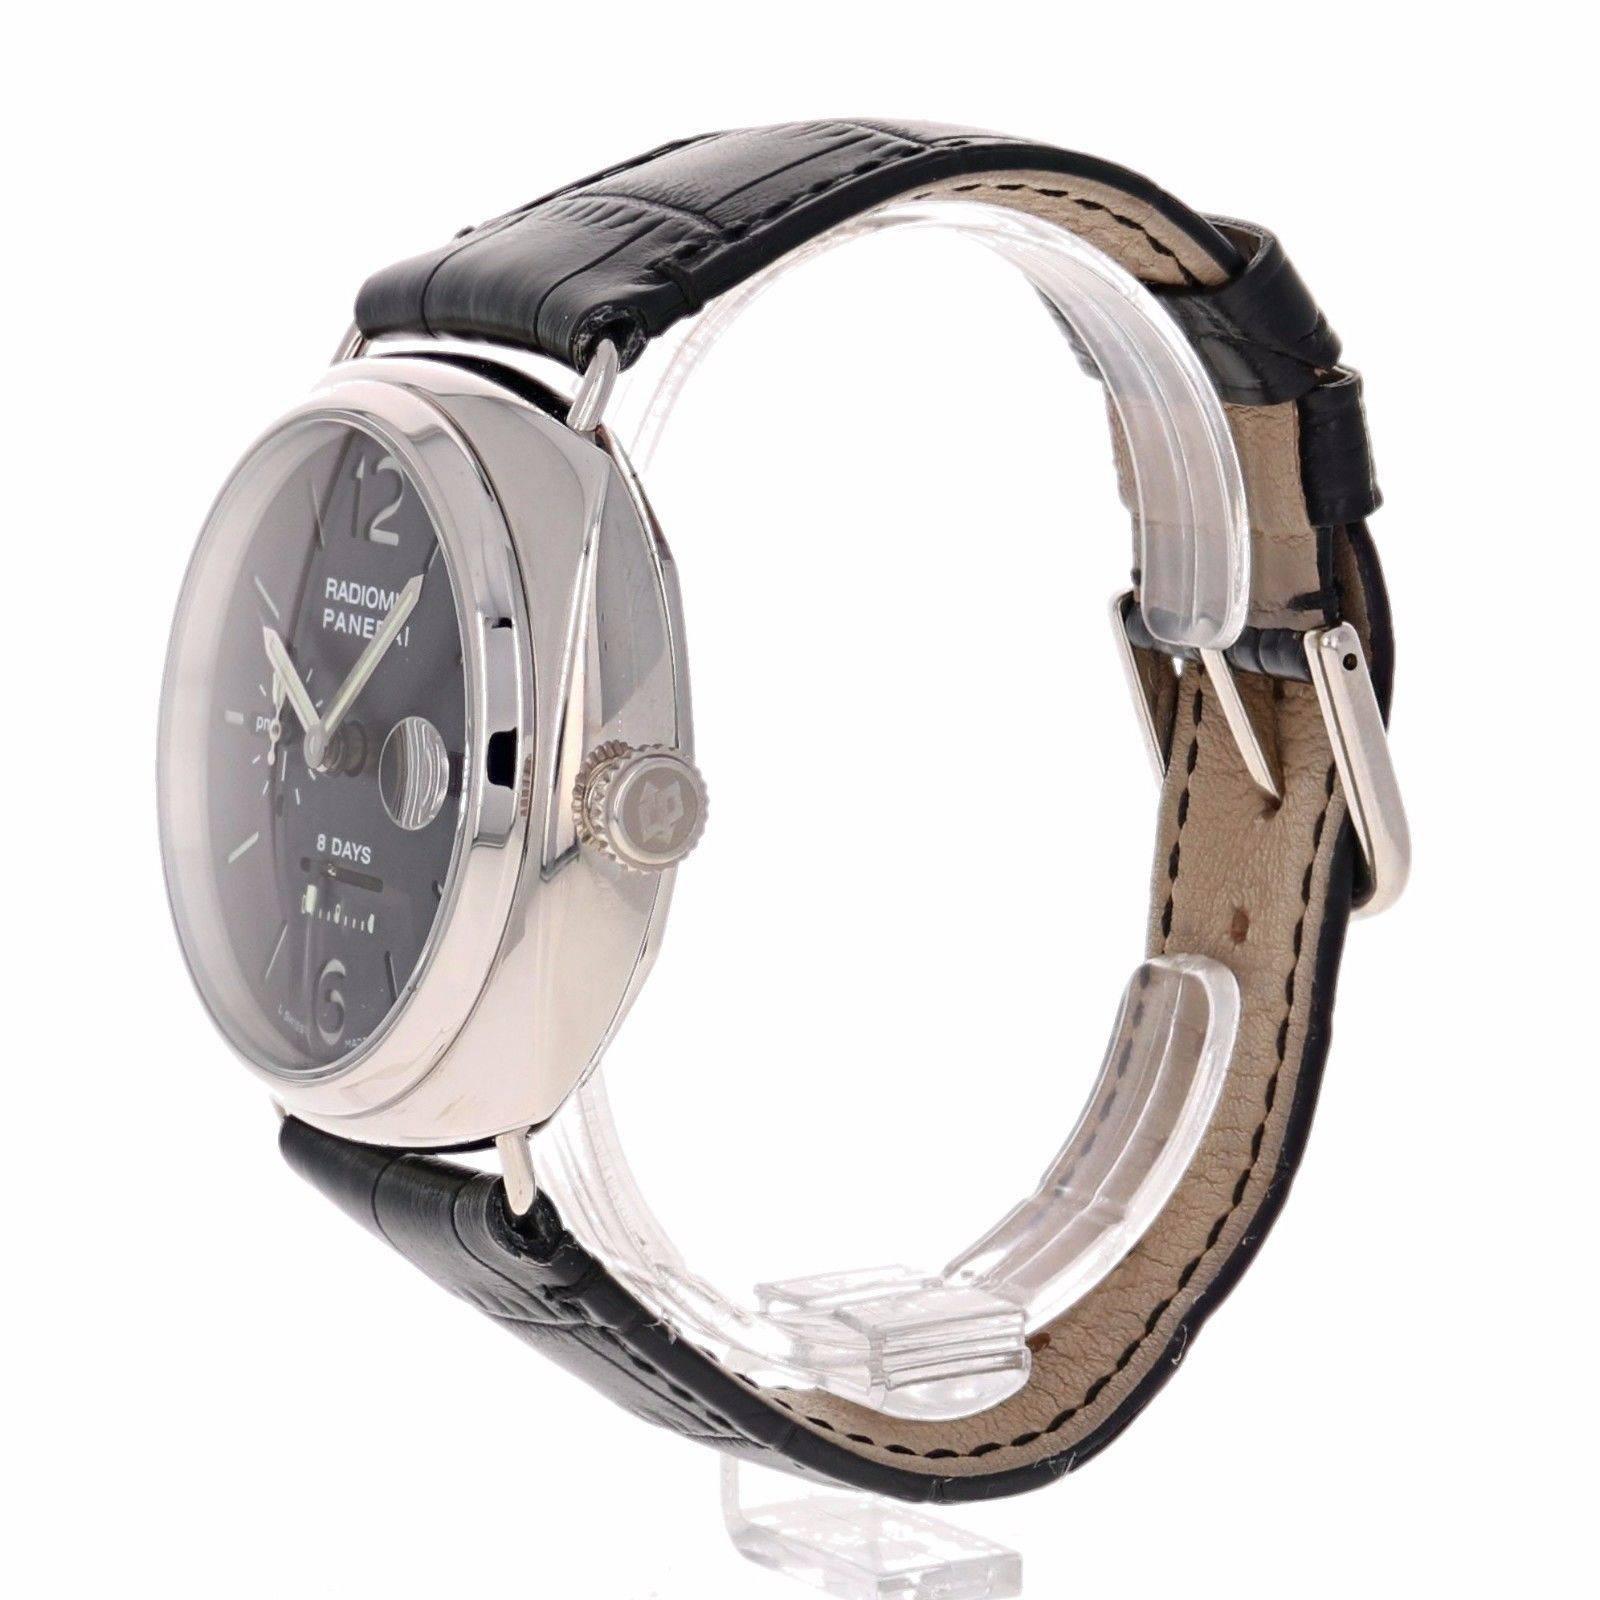 Panerai White Gold Radiomir Sp Edition 8 Days GMT PAM 200 Wristwatch 2